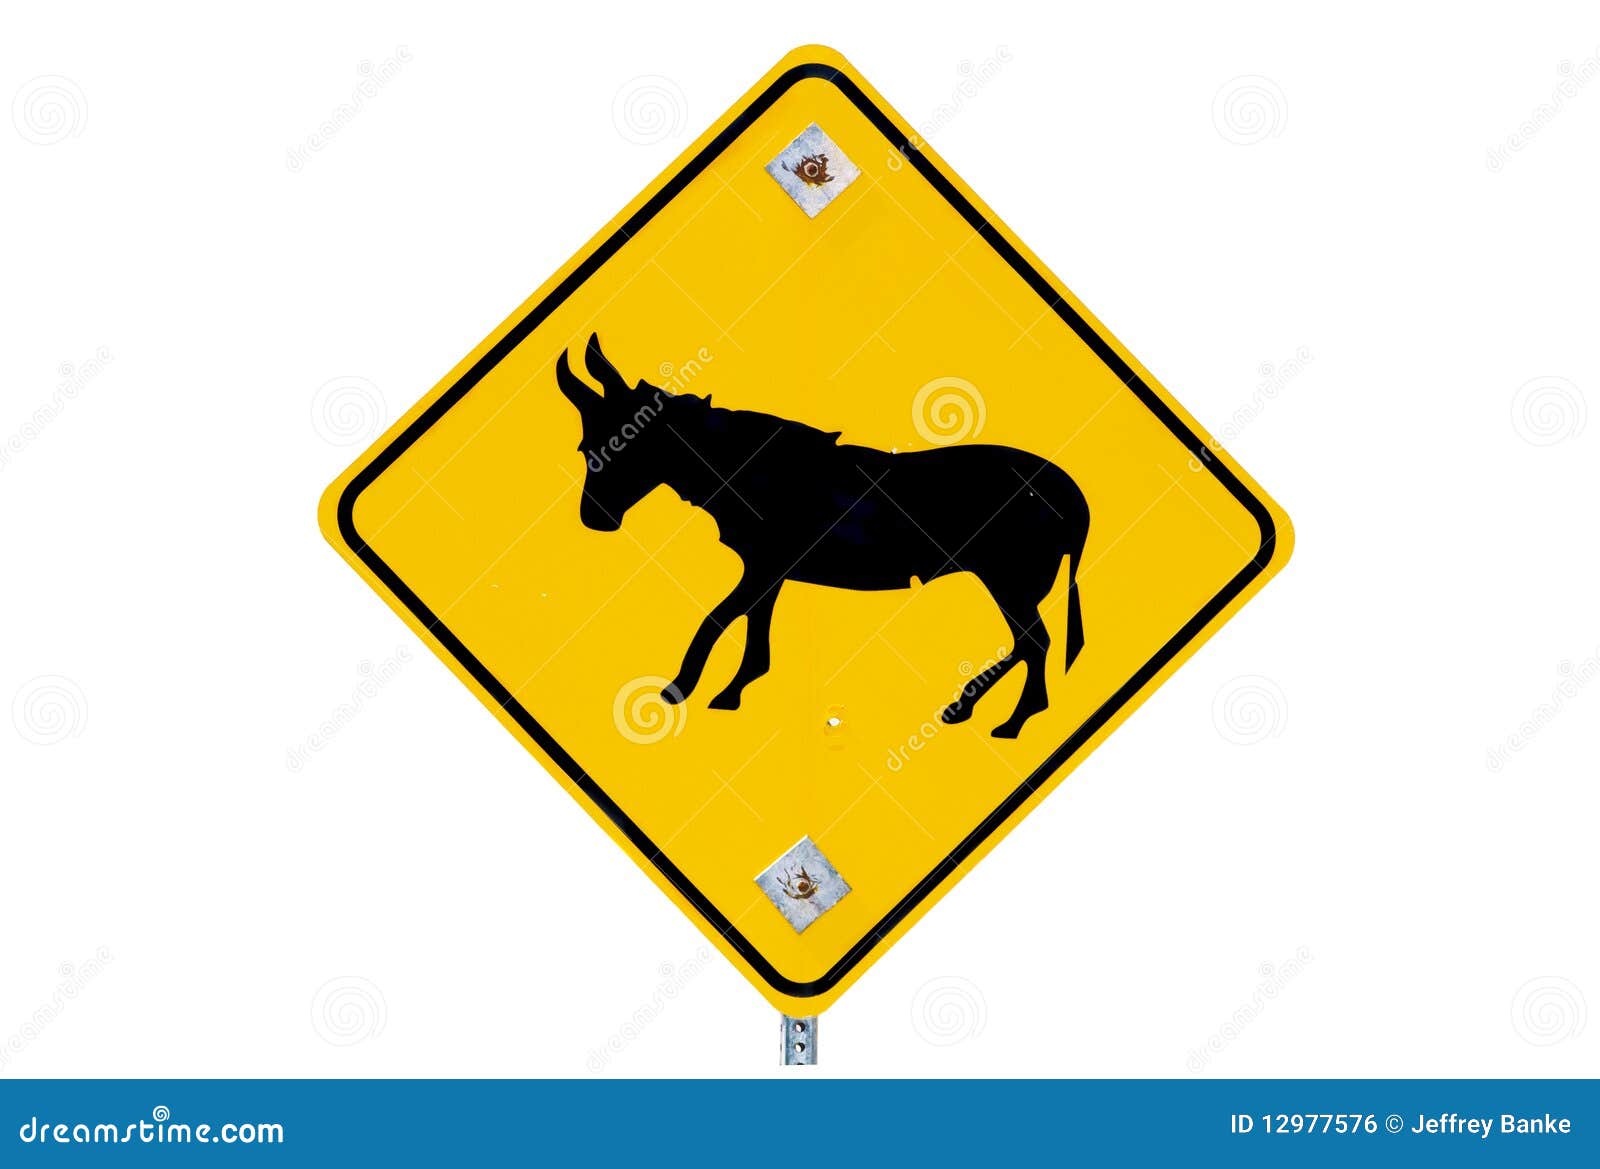 donkey road sign